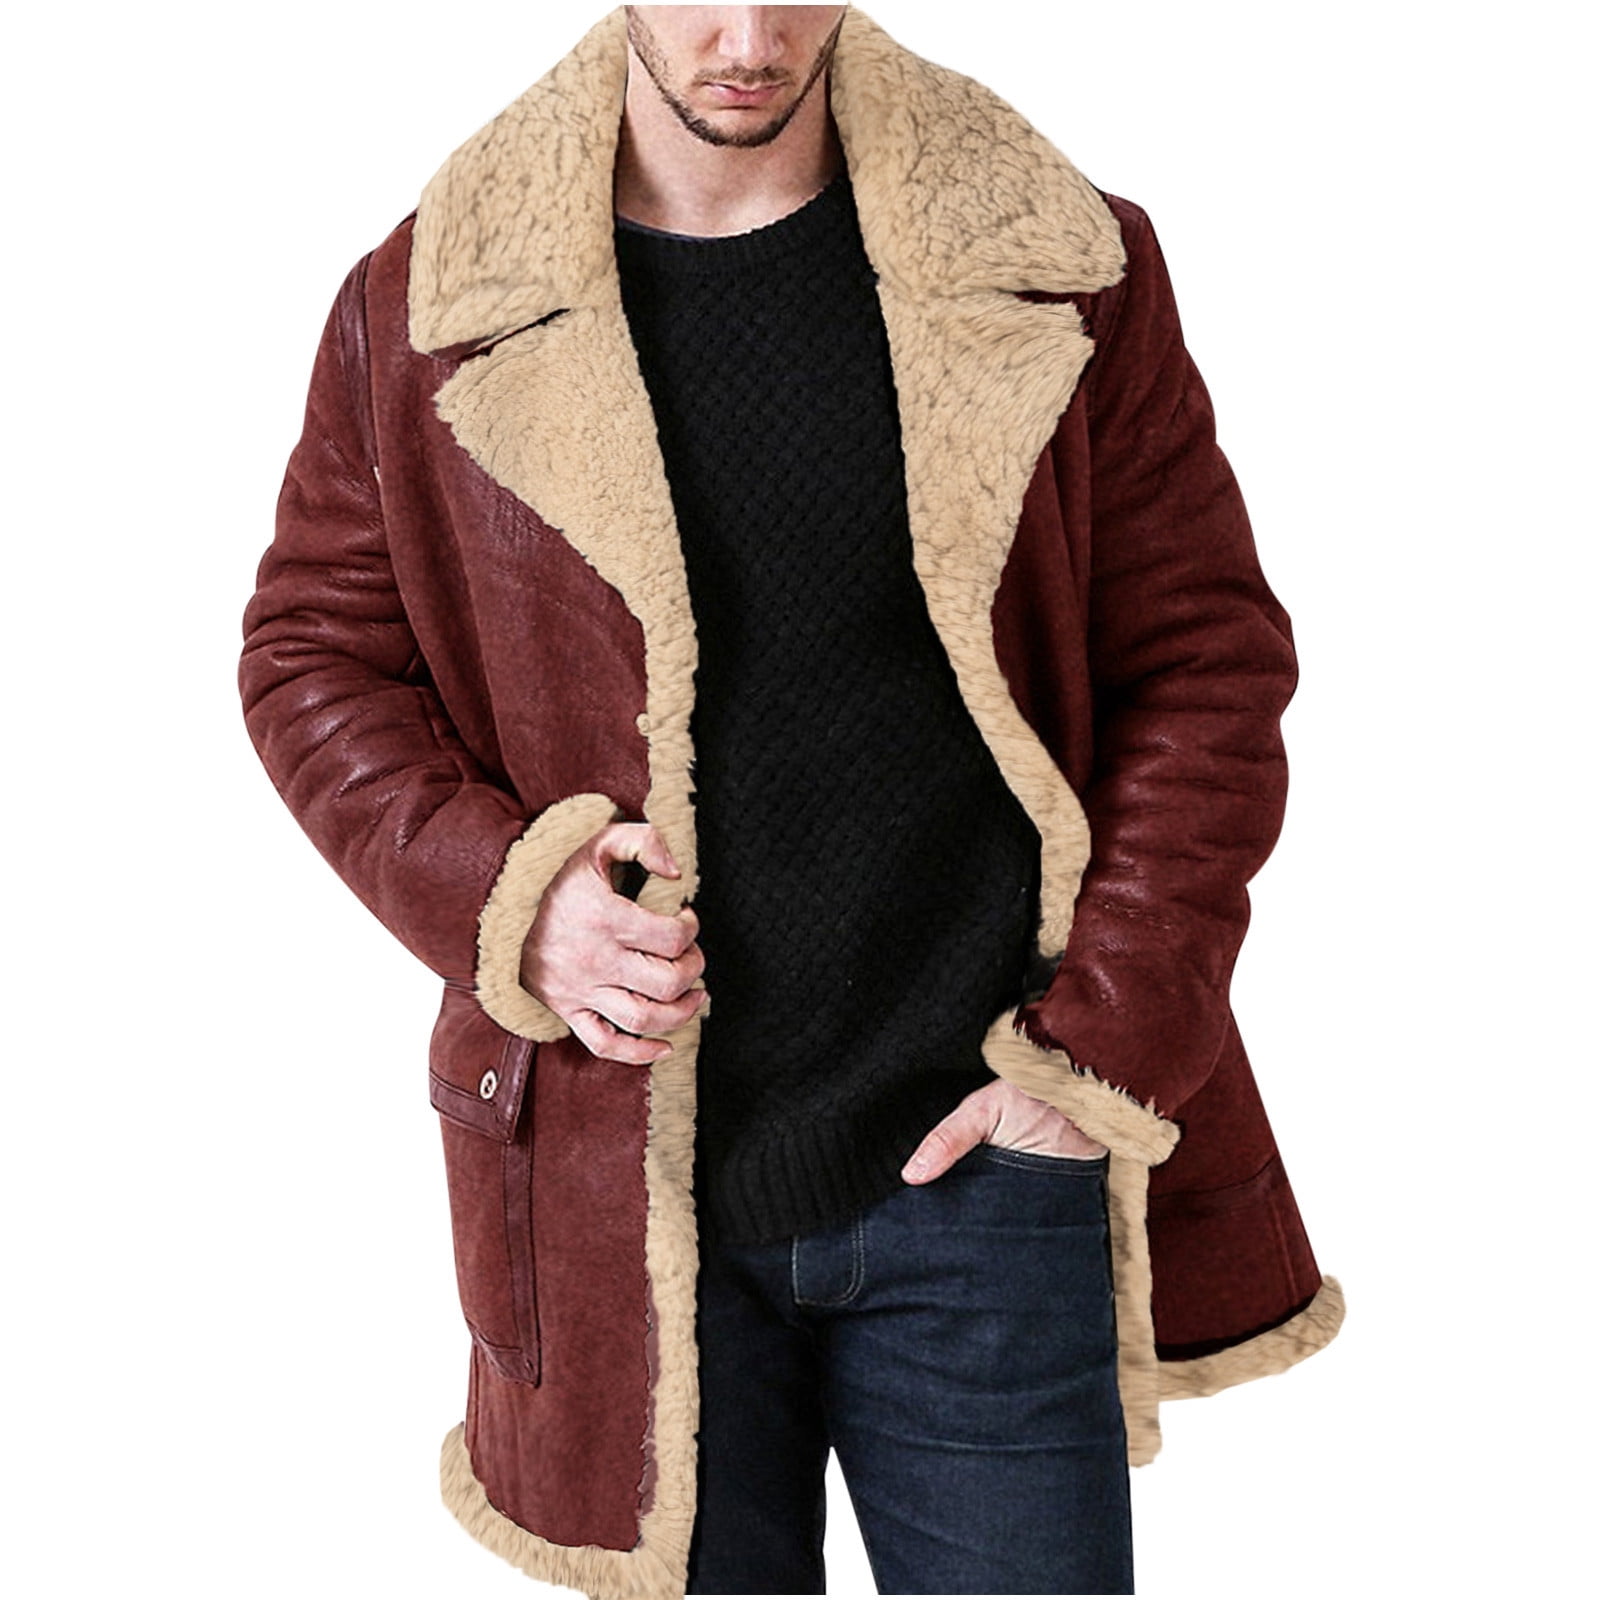 ZCFZJW Sherpa Fleece Lined Jacket for Men Vintage Leather Distressed ...